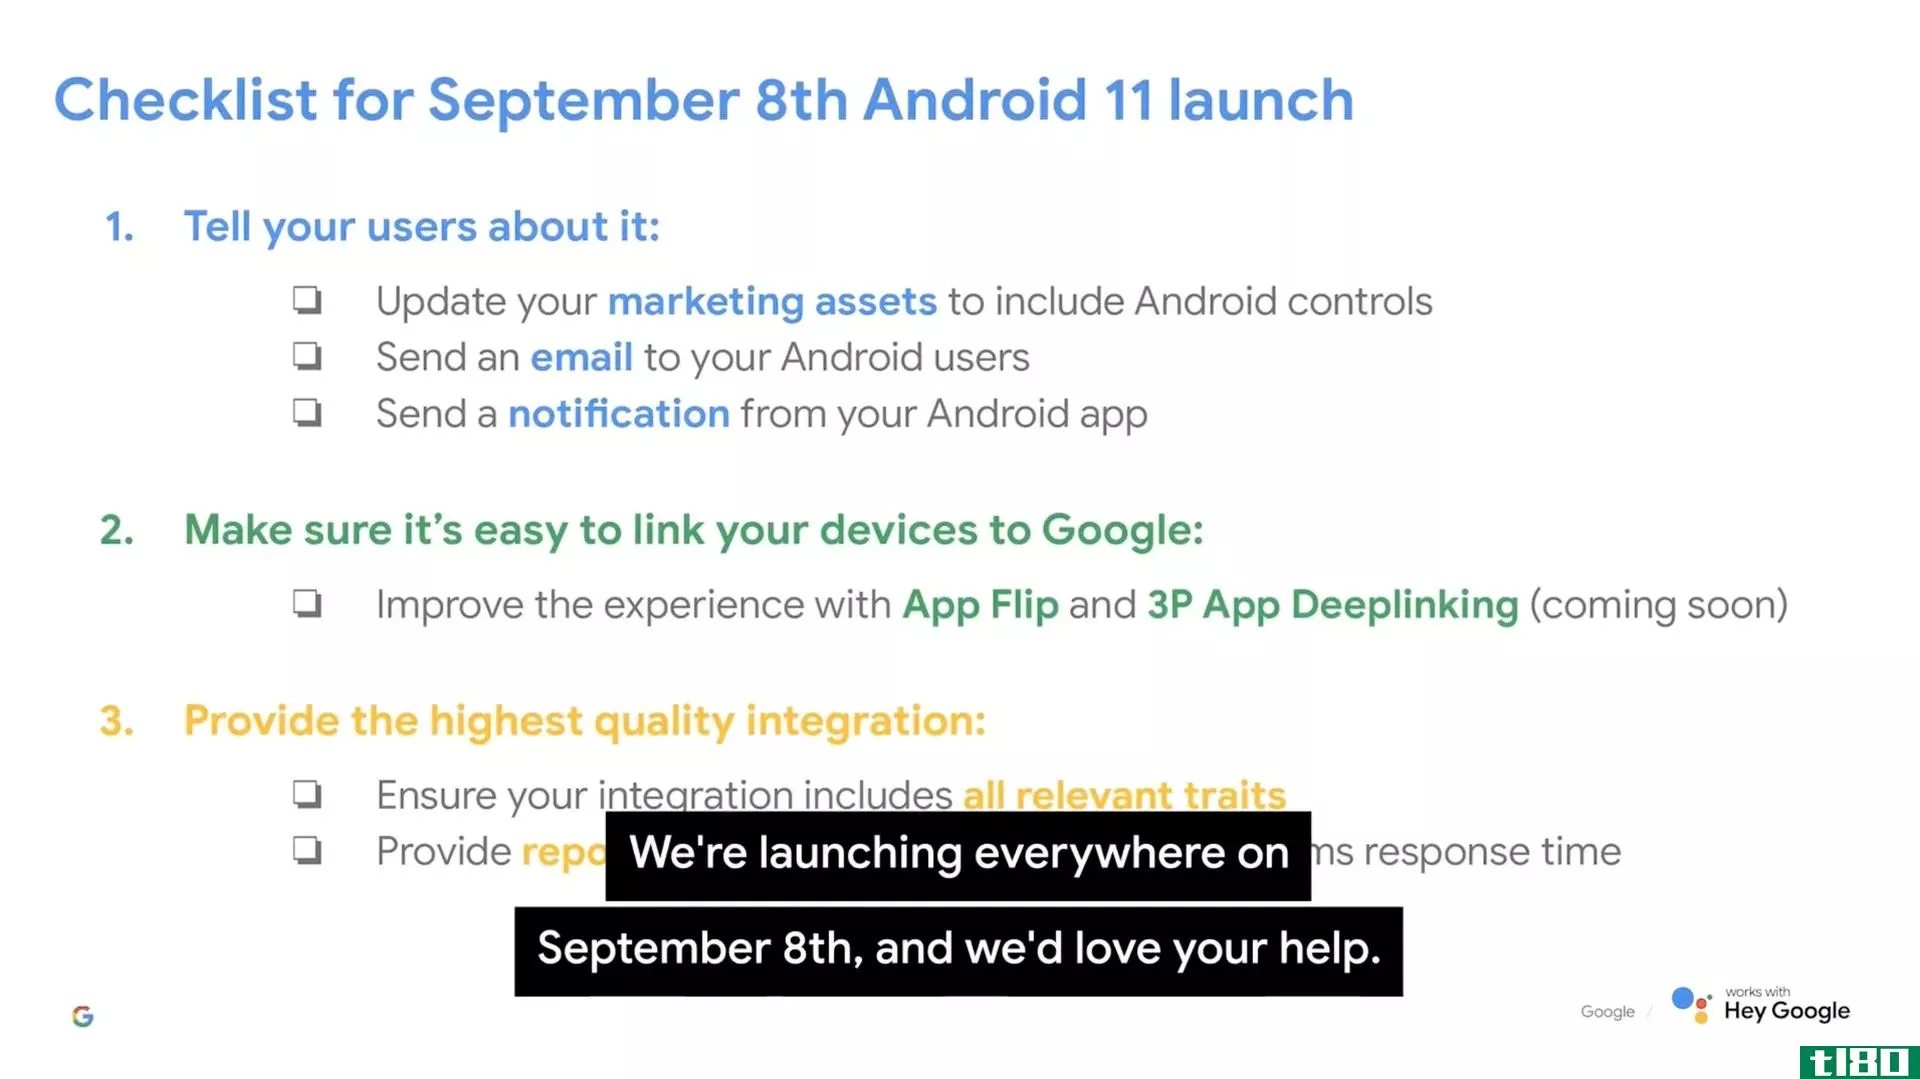 谷歌视频显示android 11将于9月8日发布